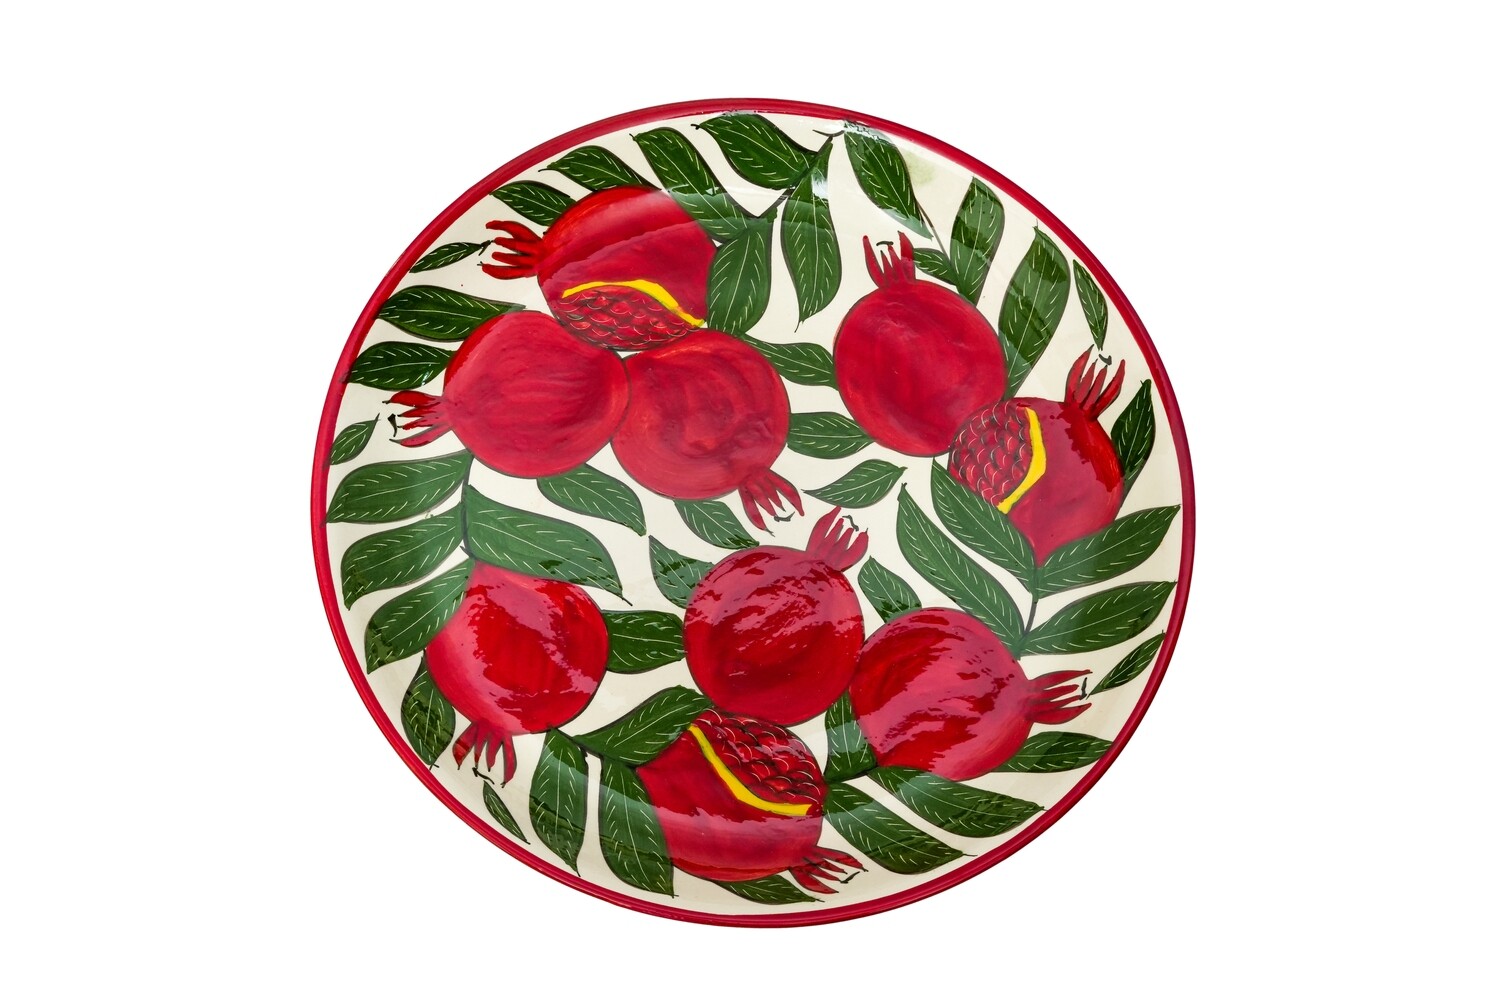 Uzbek pomegranate design